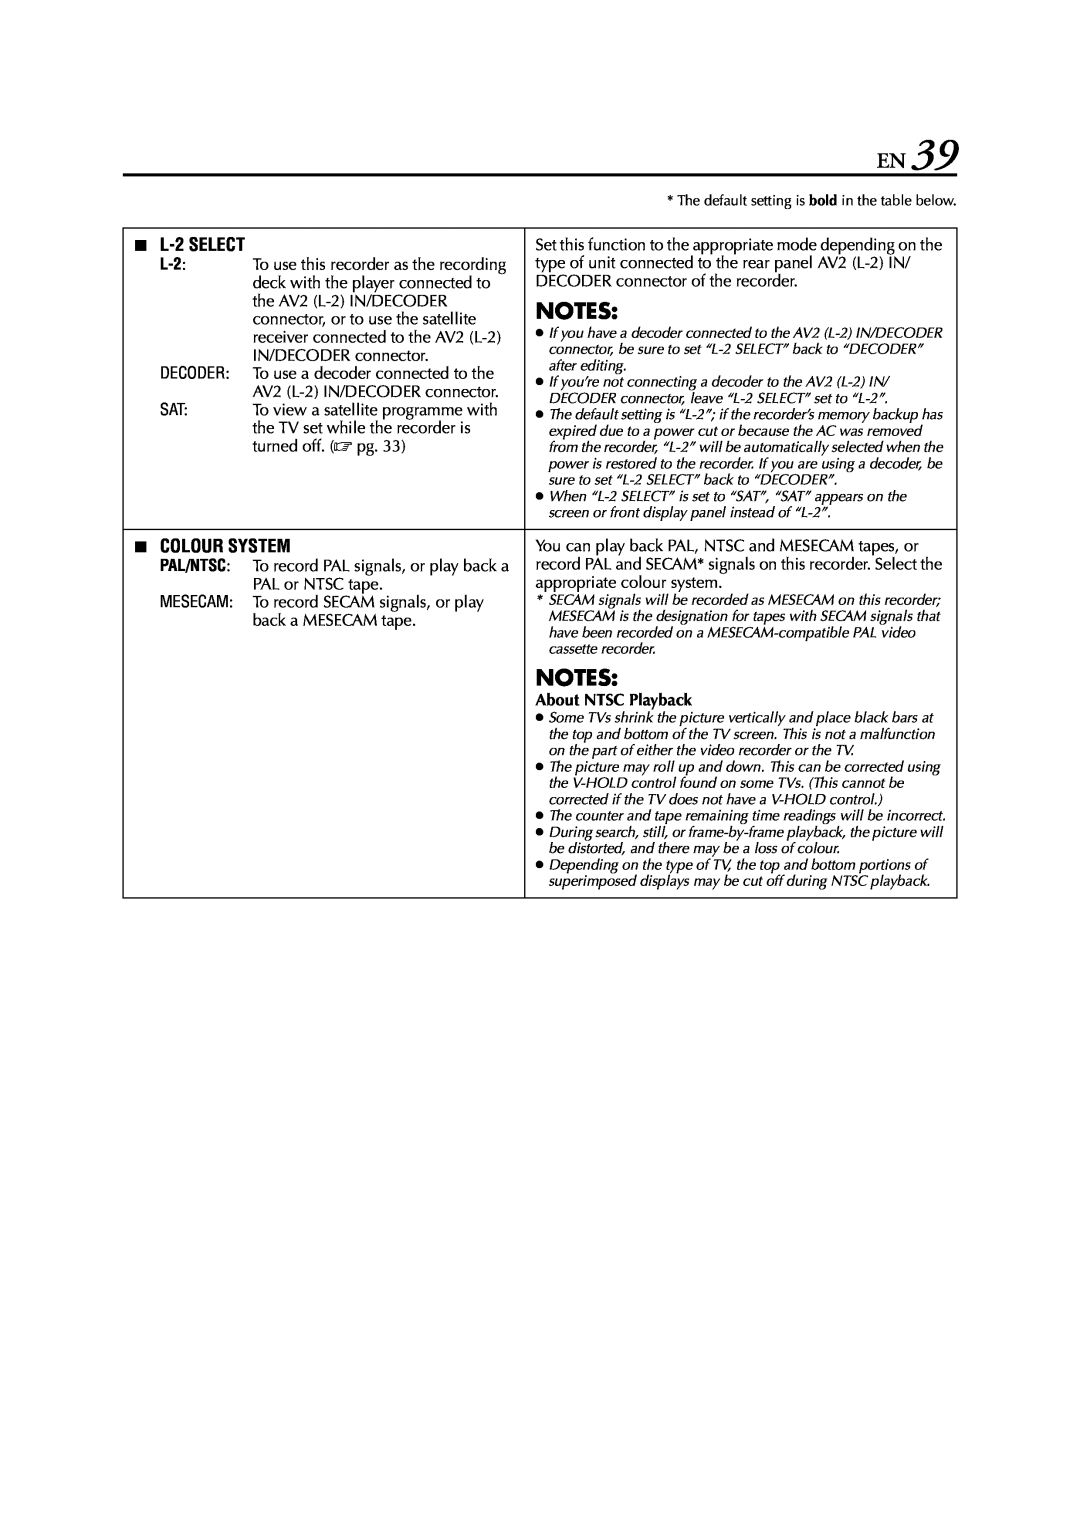 JVC HR-J674EU instruction manual 8 L-2 SELECT, Colour System, Pal/Ntsc, About NTSC Playback 